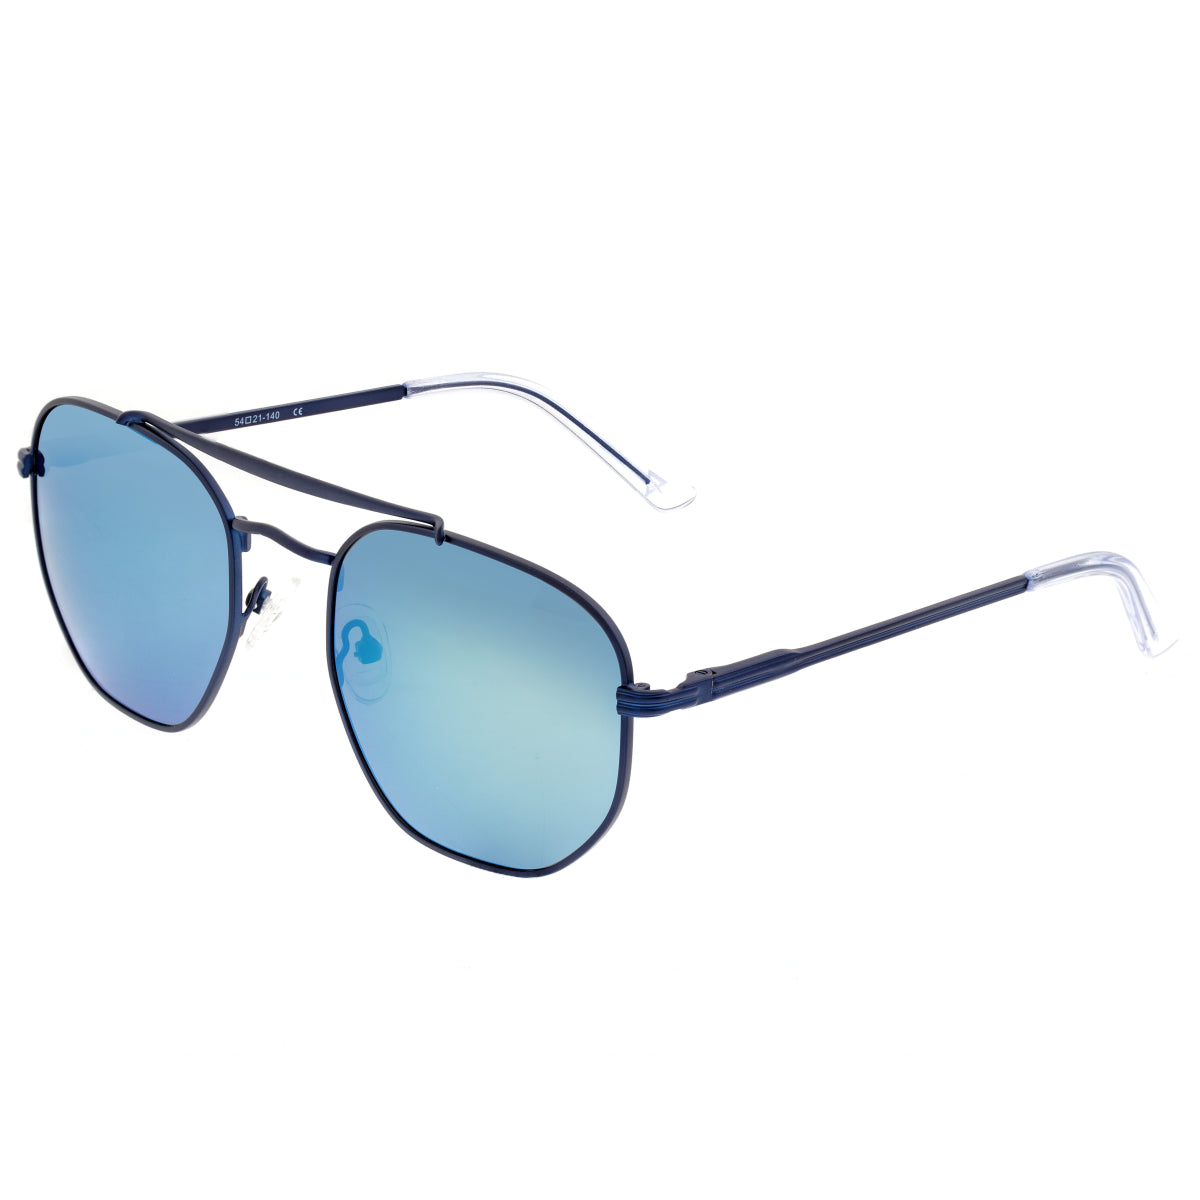 Sixty One Stockton Polarized Sunglasses - Blue/Blue-Green - SIXS103BL